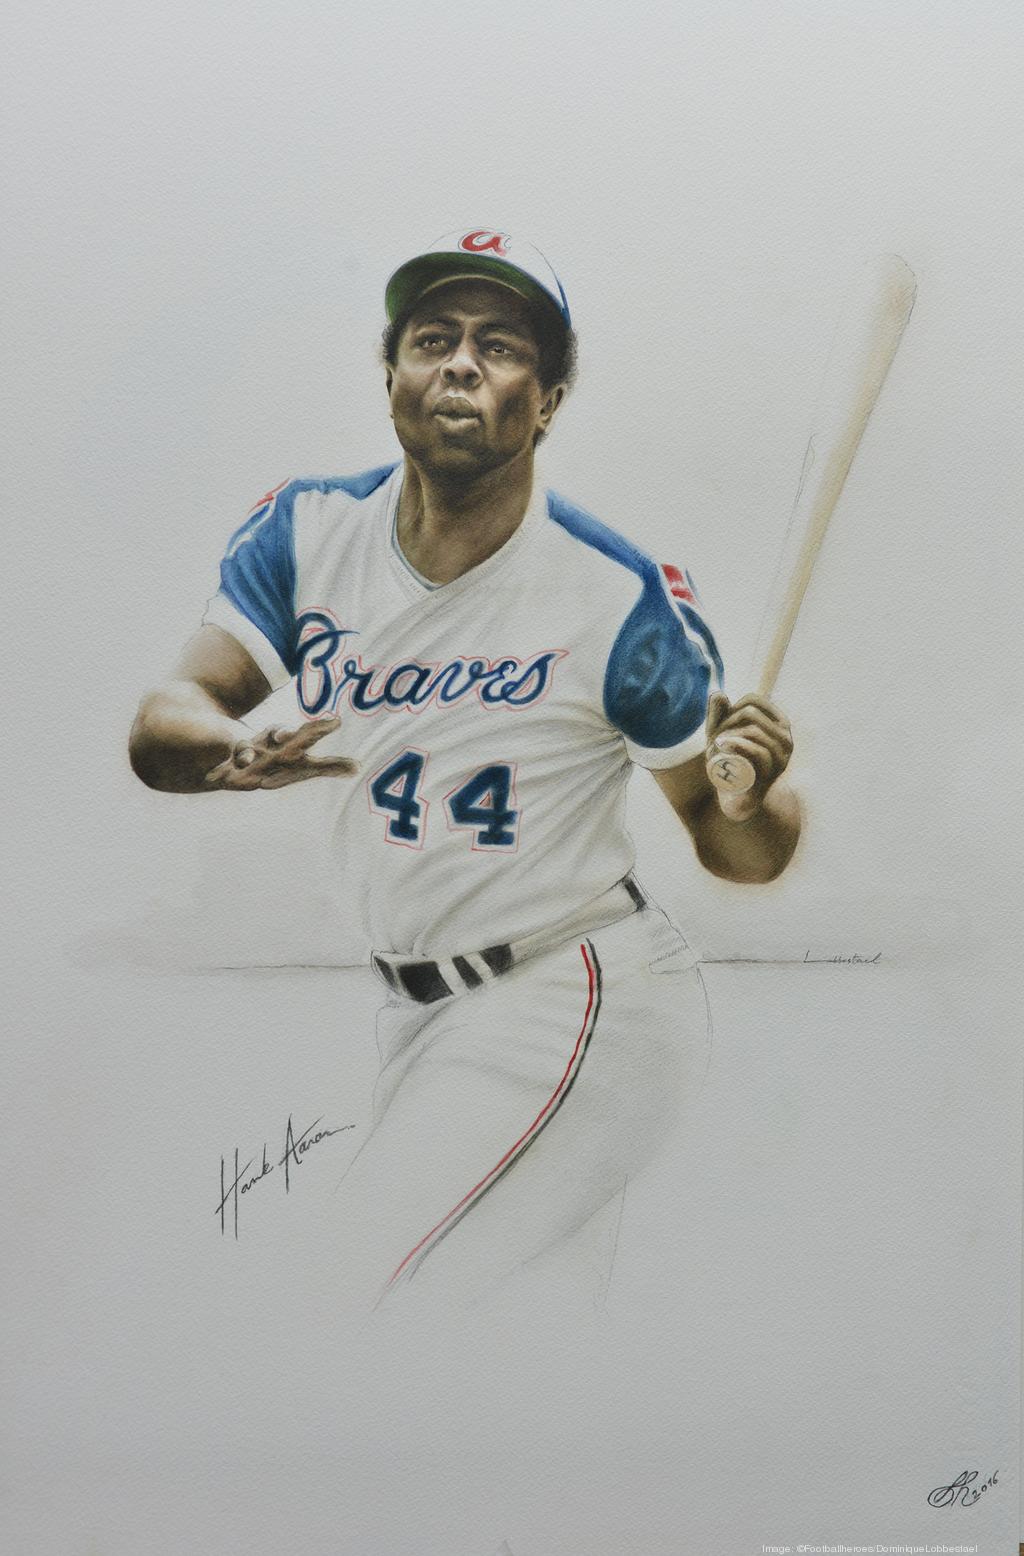 Atlanta Braves 2021 Art in the Park Poster Series to Honor Hank Aaron -  Atlanta Tribune